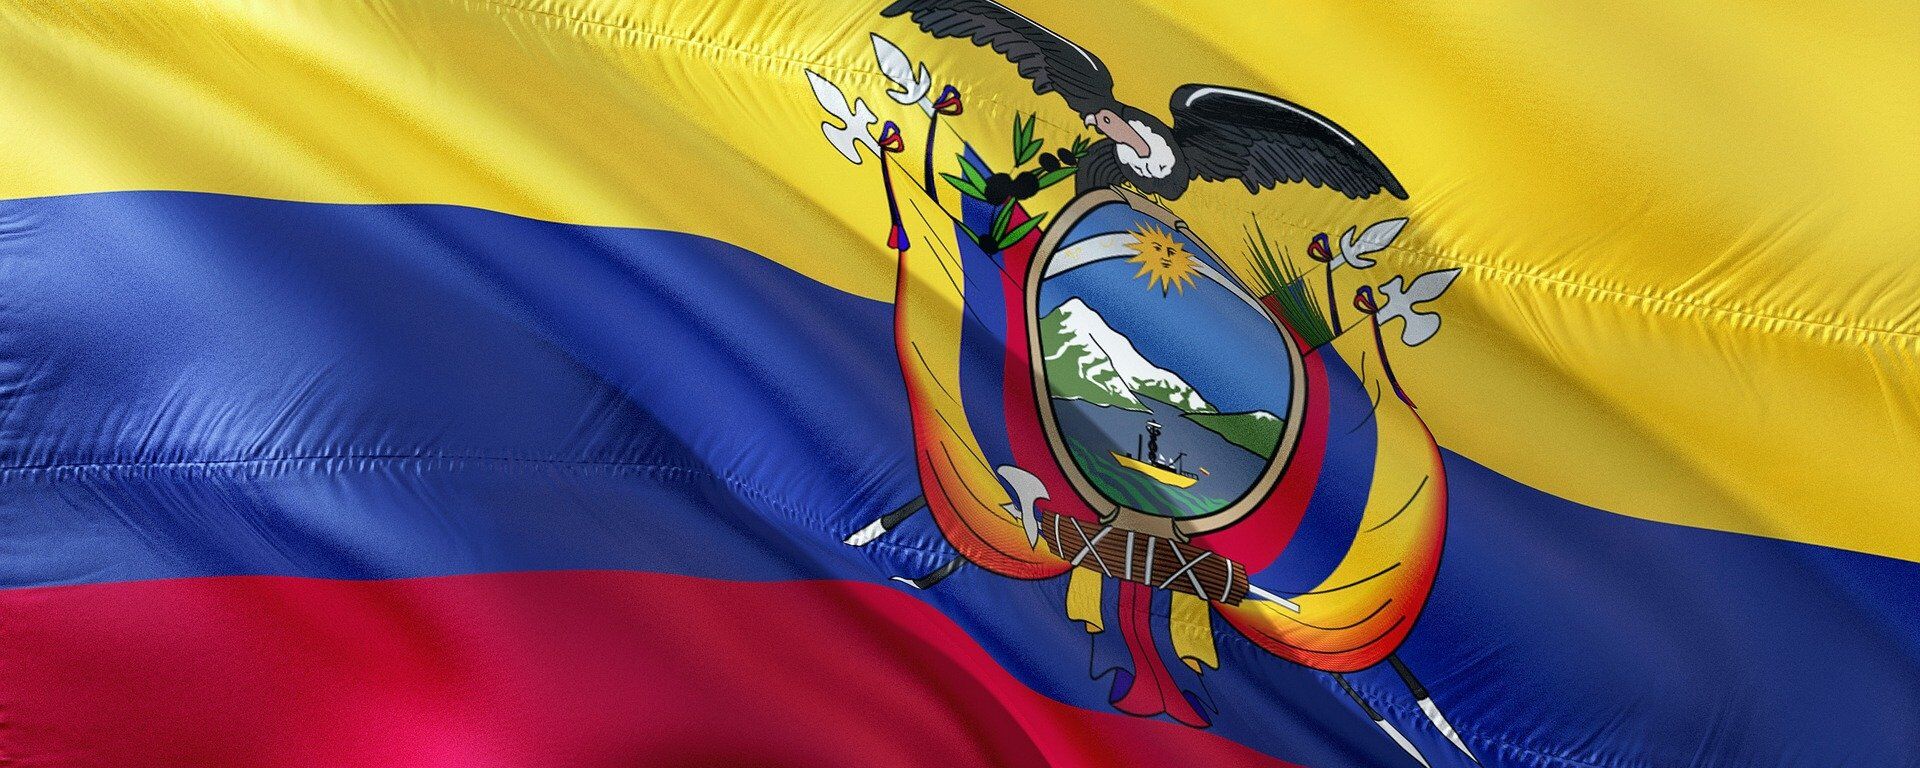 La bandera de Ecuador - Sputnik Mundo, 1920, 24.02.2021